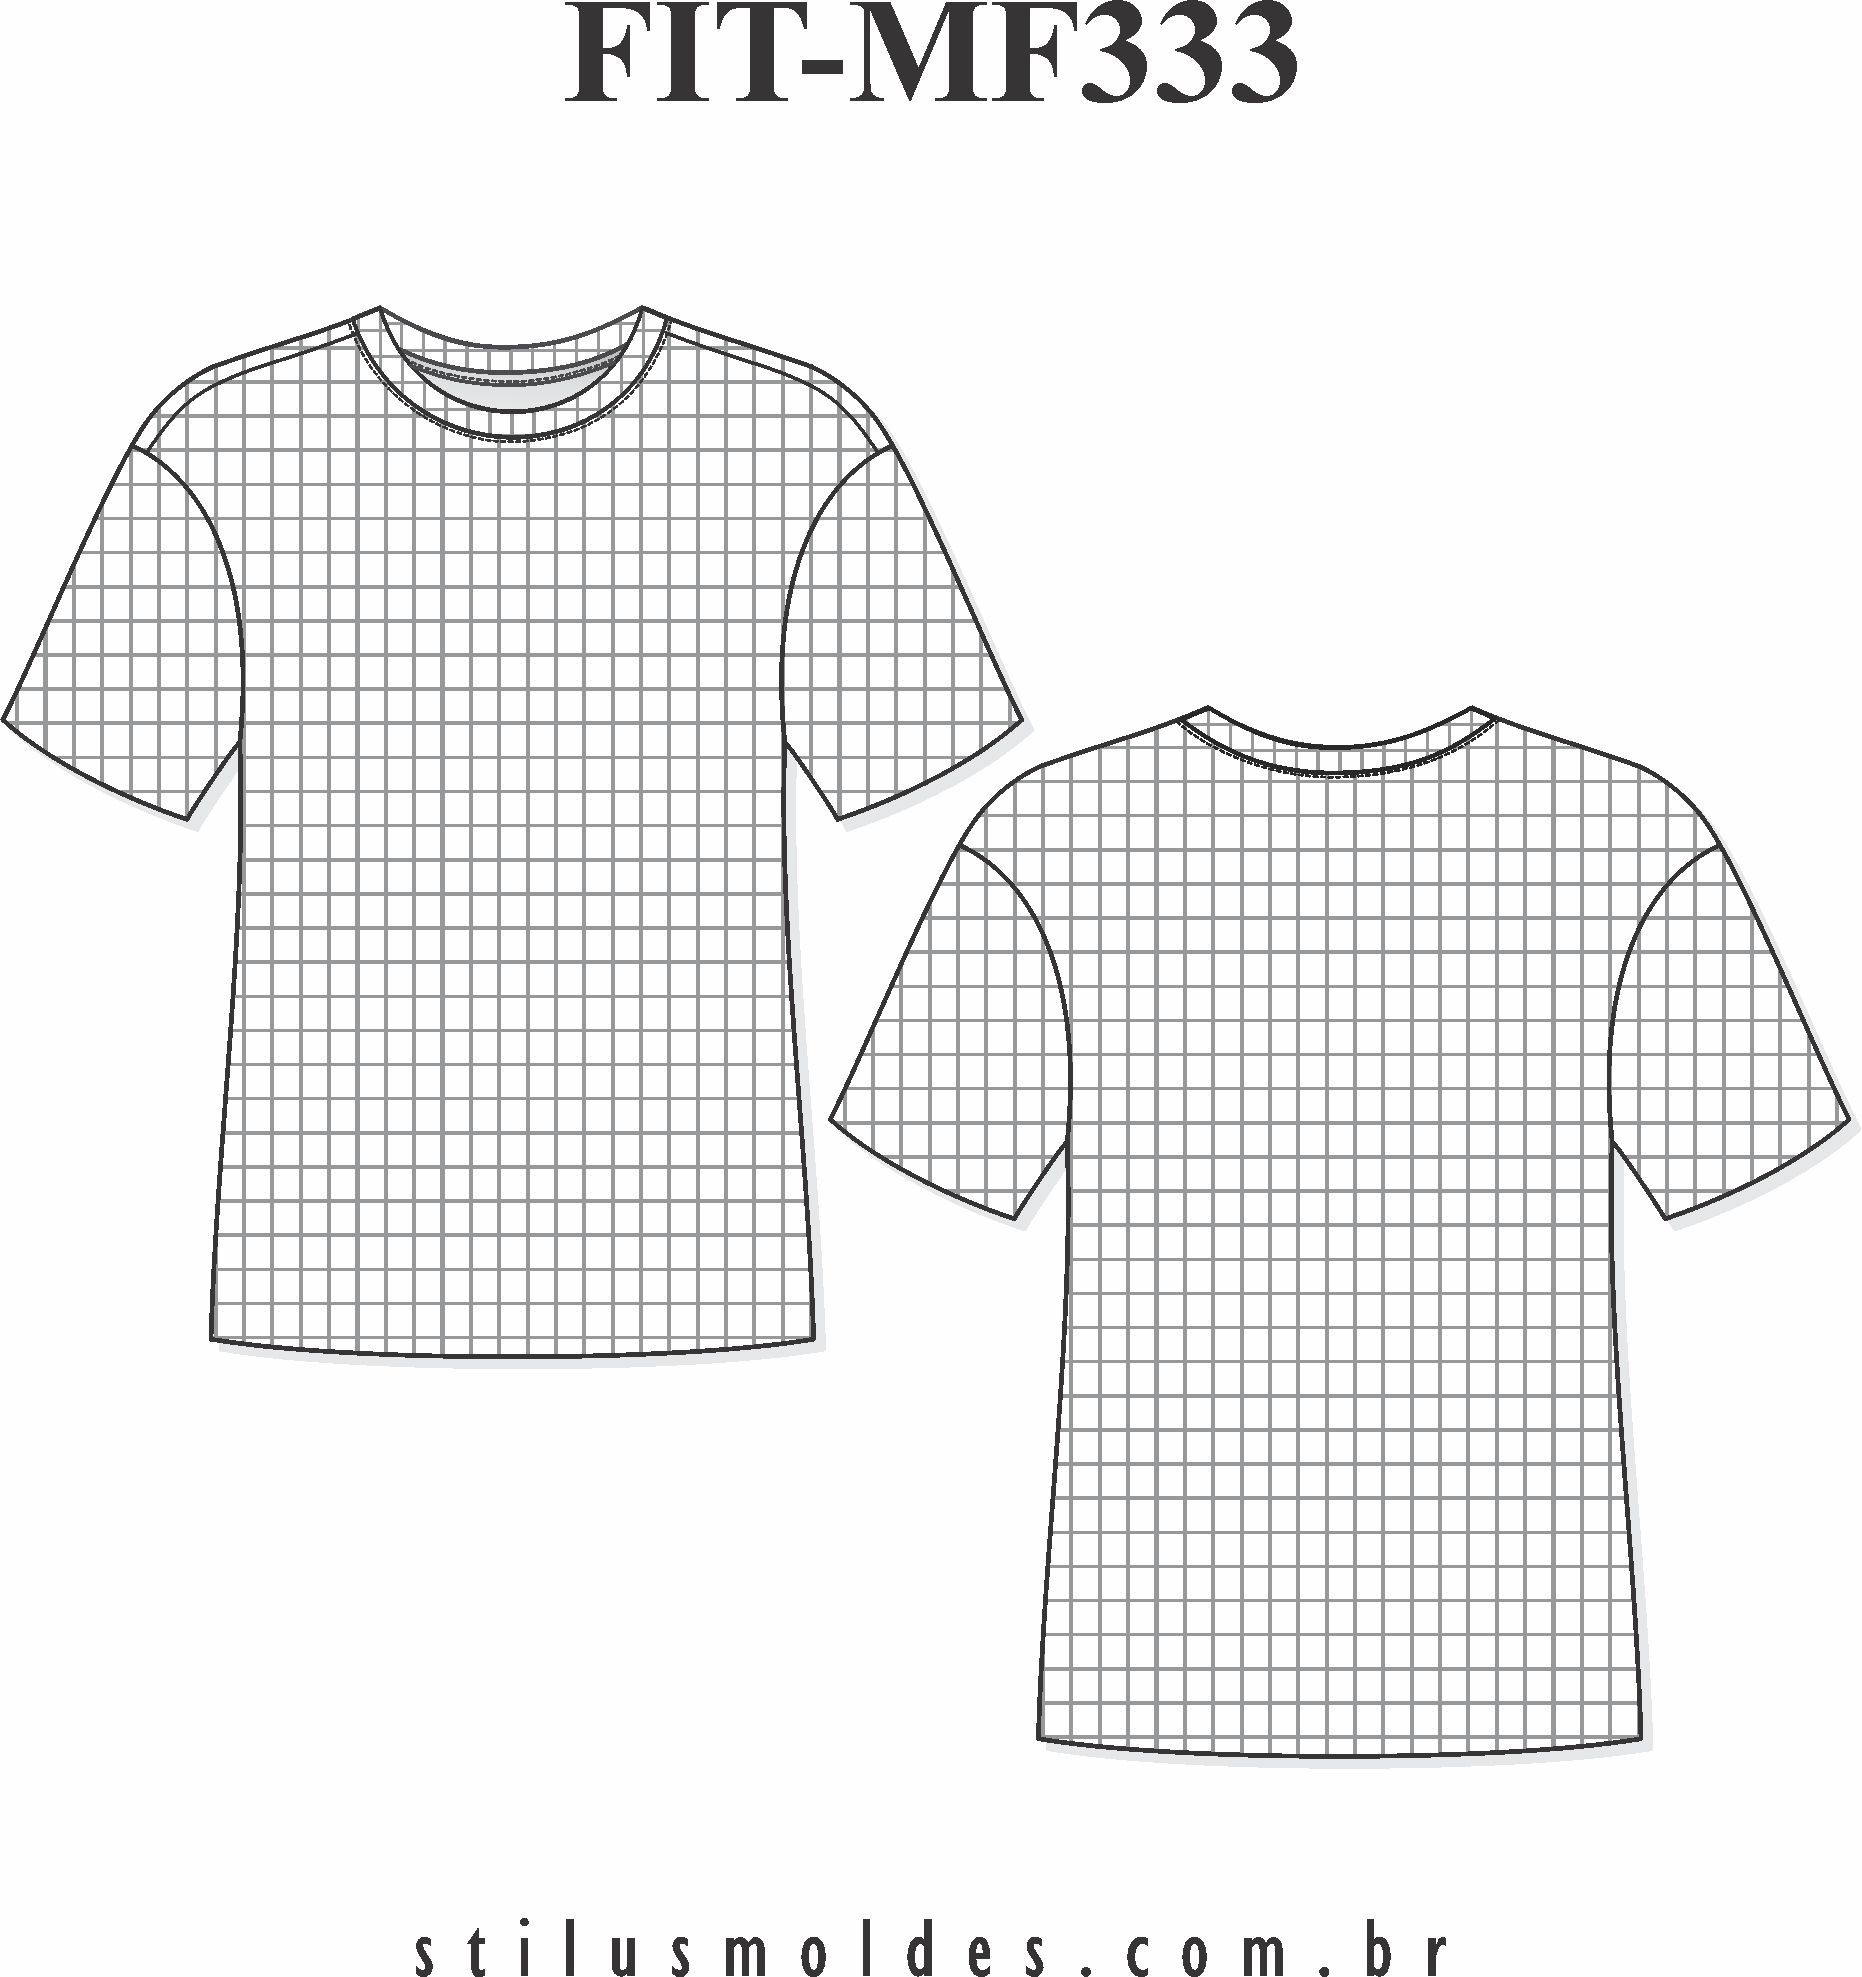 Camiseta Fitness (FIT-MF333) - Foto 0